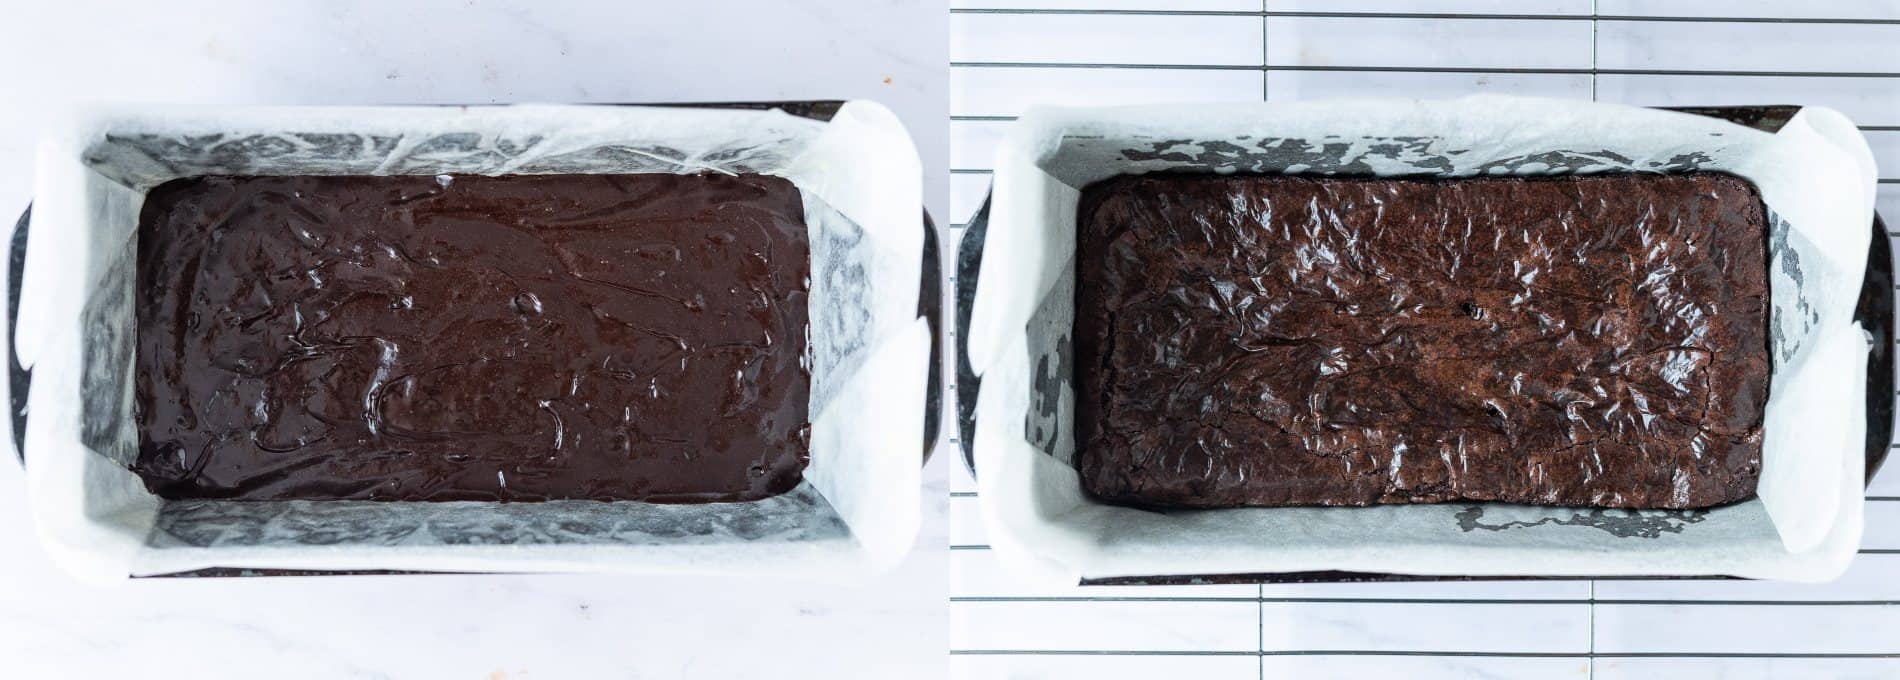 step 3 - baking the brownies